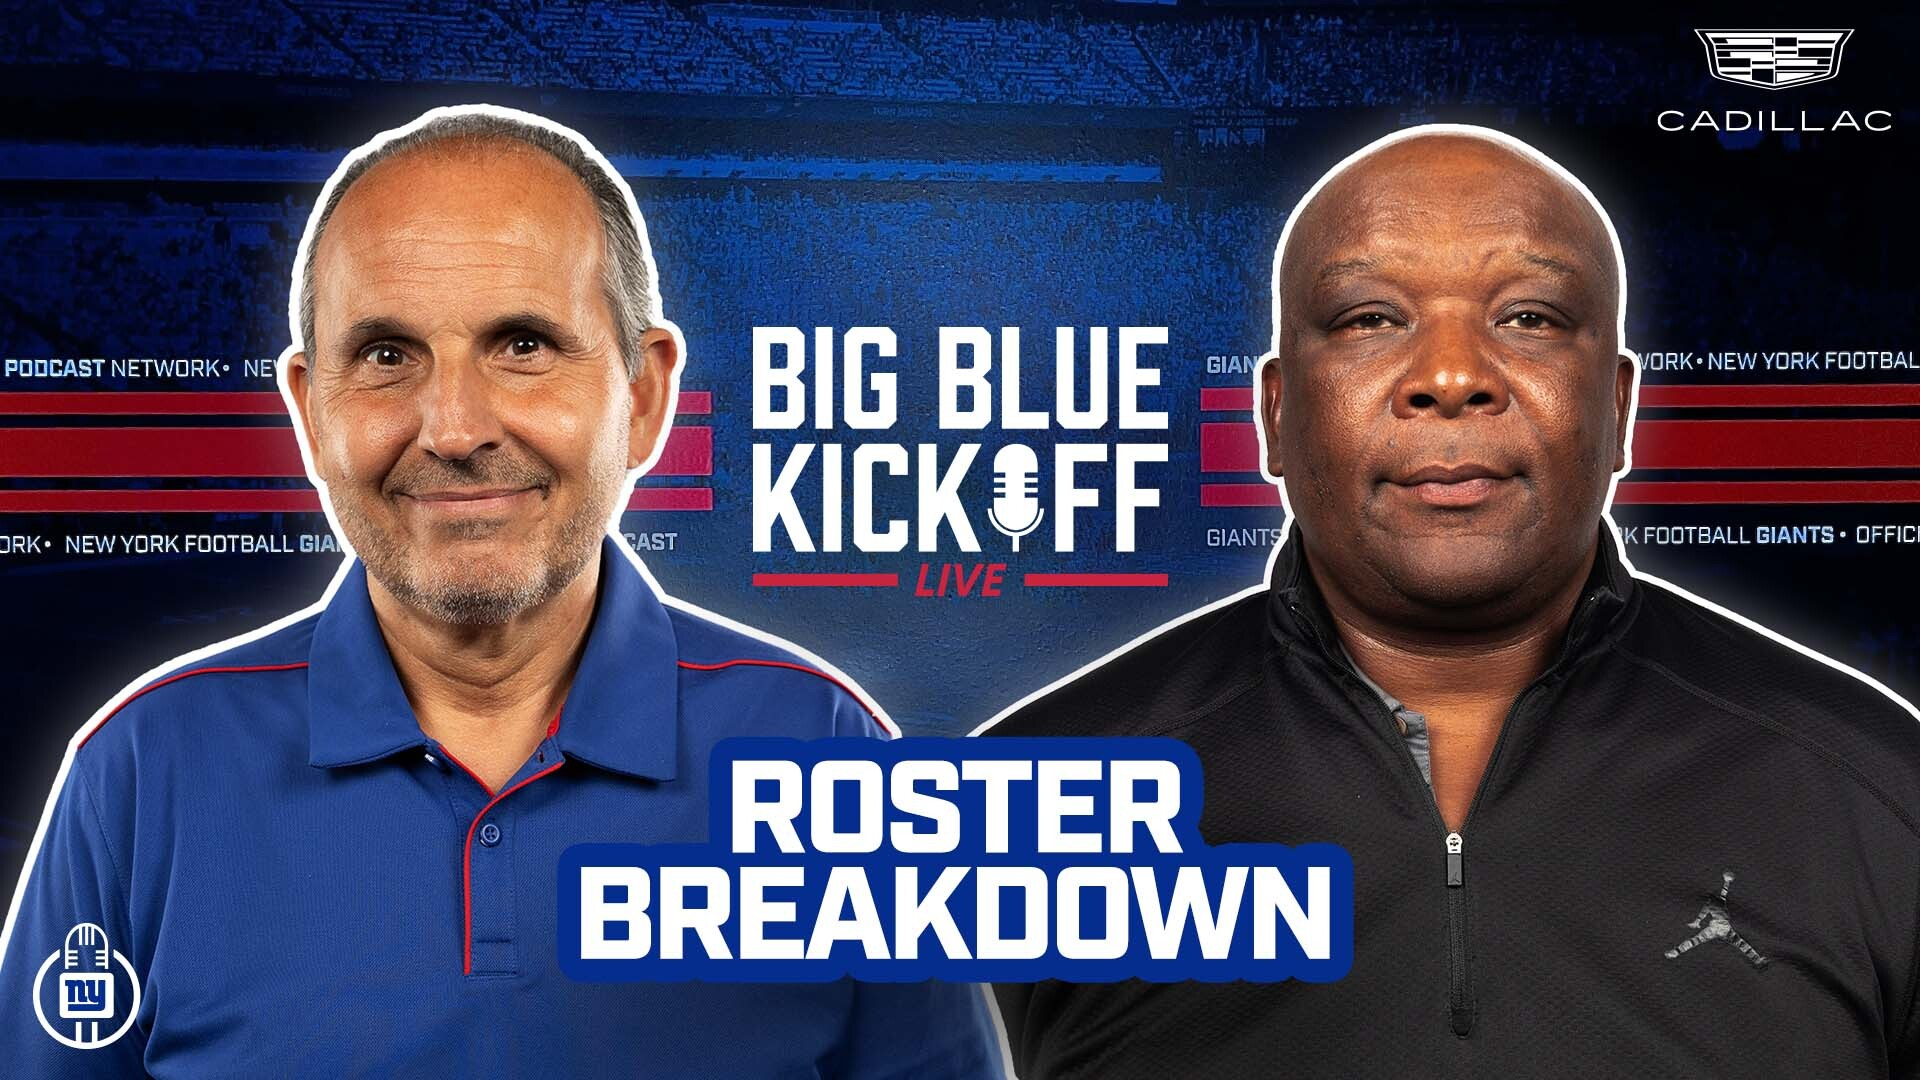 Big Blue Kickoff Live 4/30 | Roster Breakdown